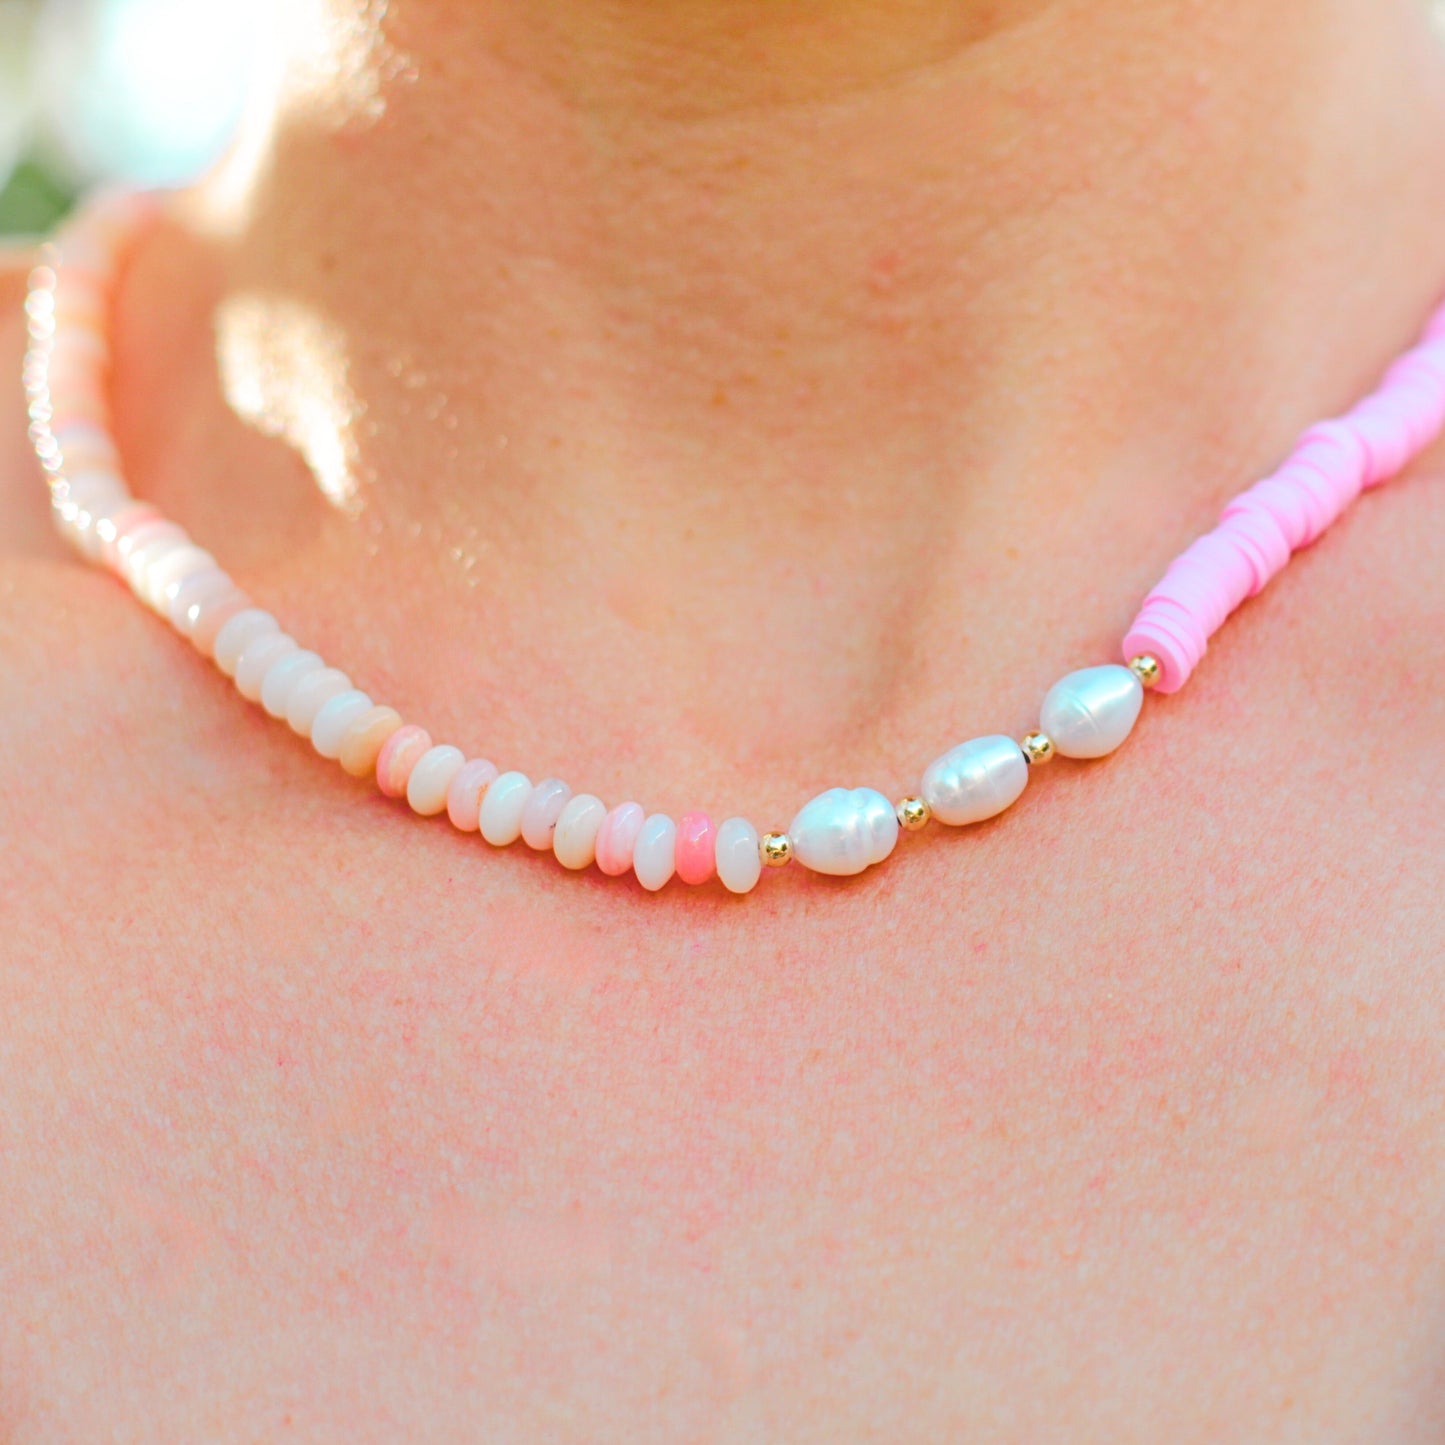 azalea necklace detail